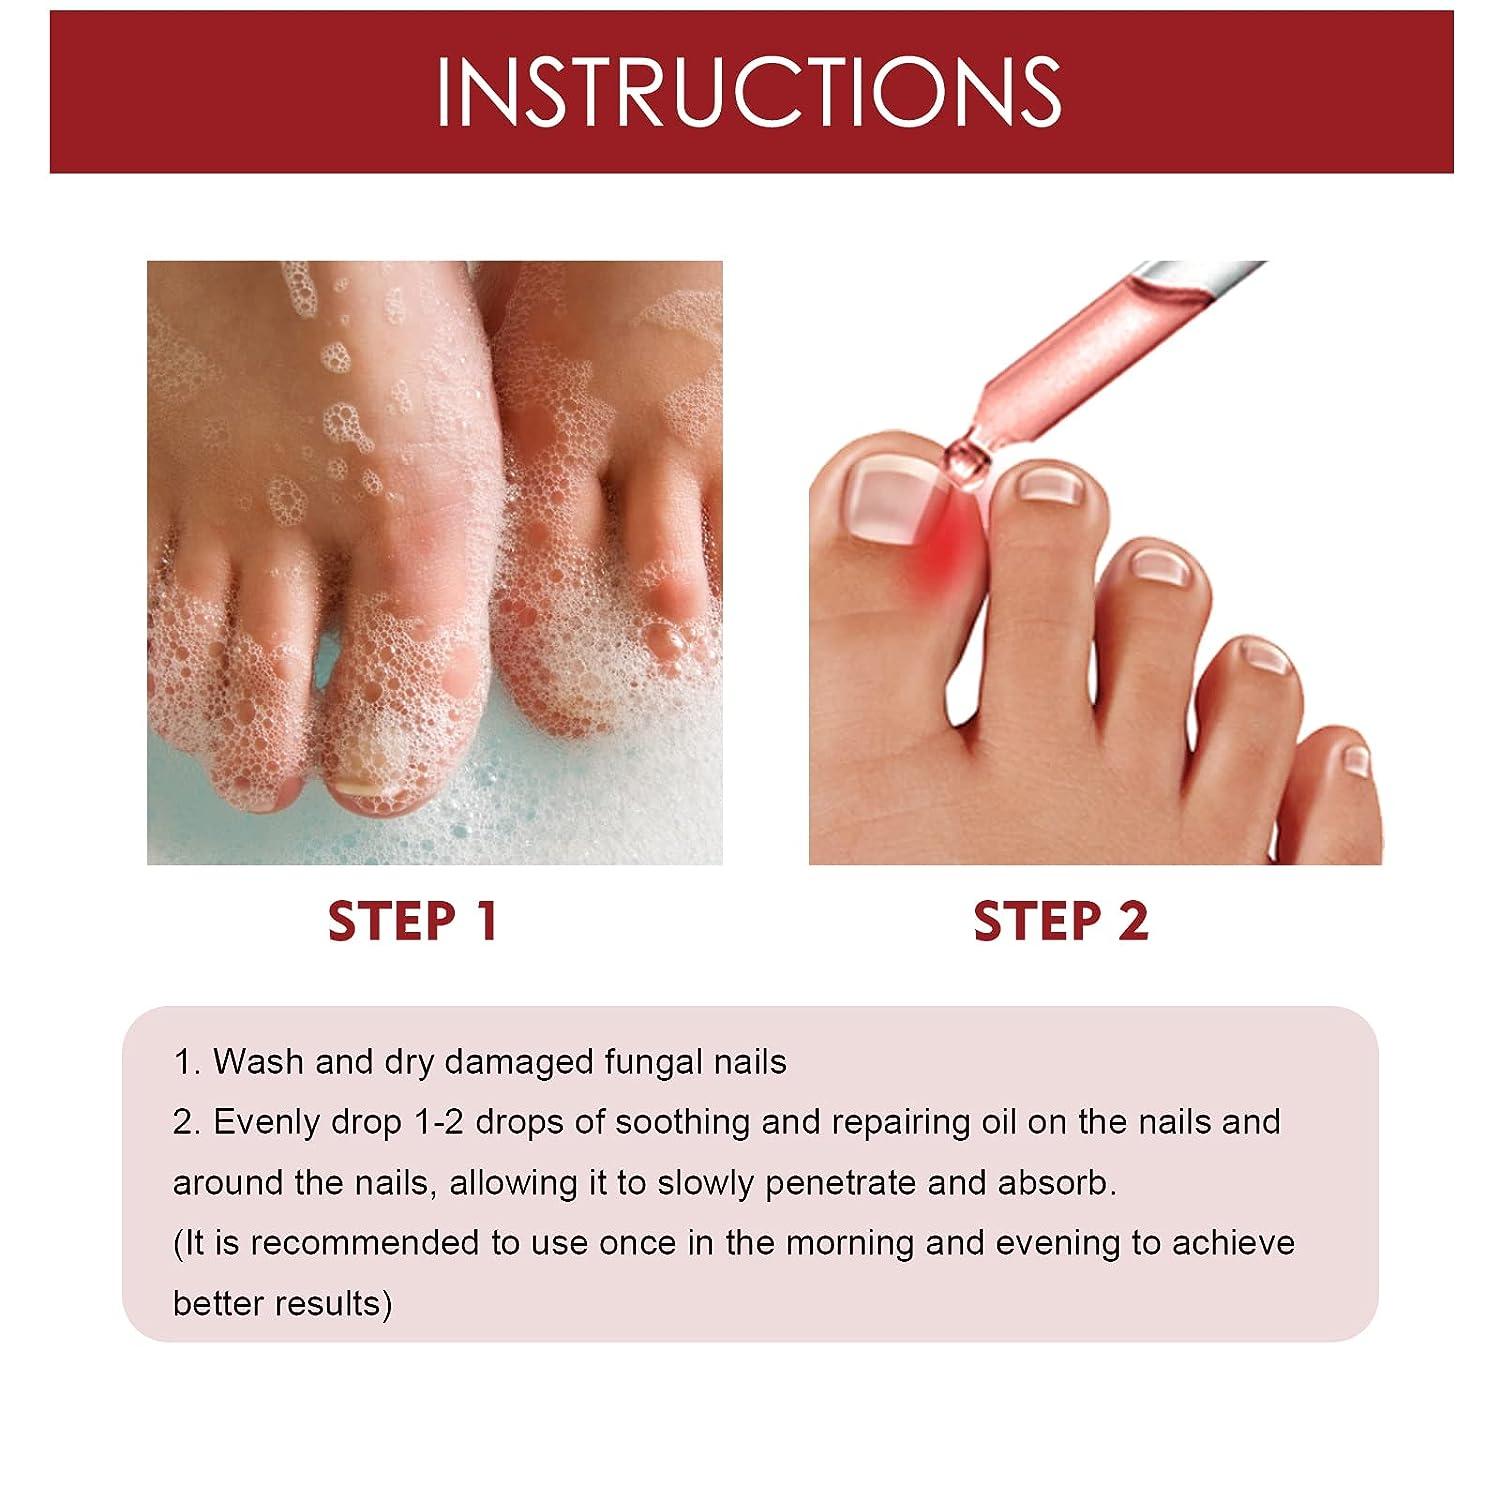 Understanding Top of Foot Pain: Causes, Symptoms & Treatment